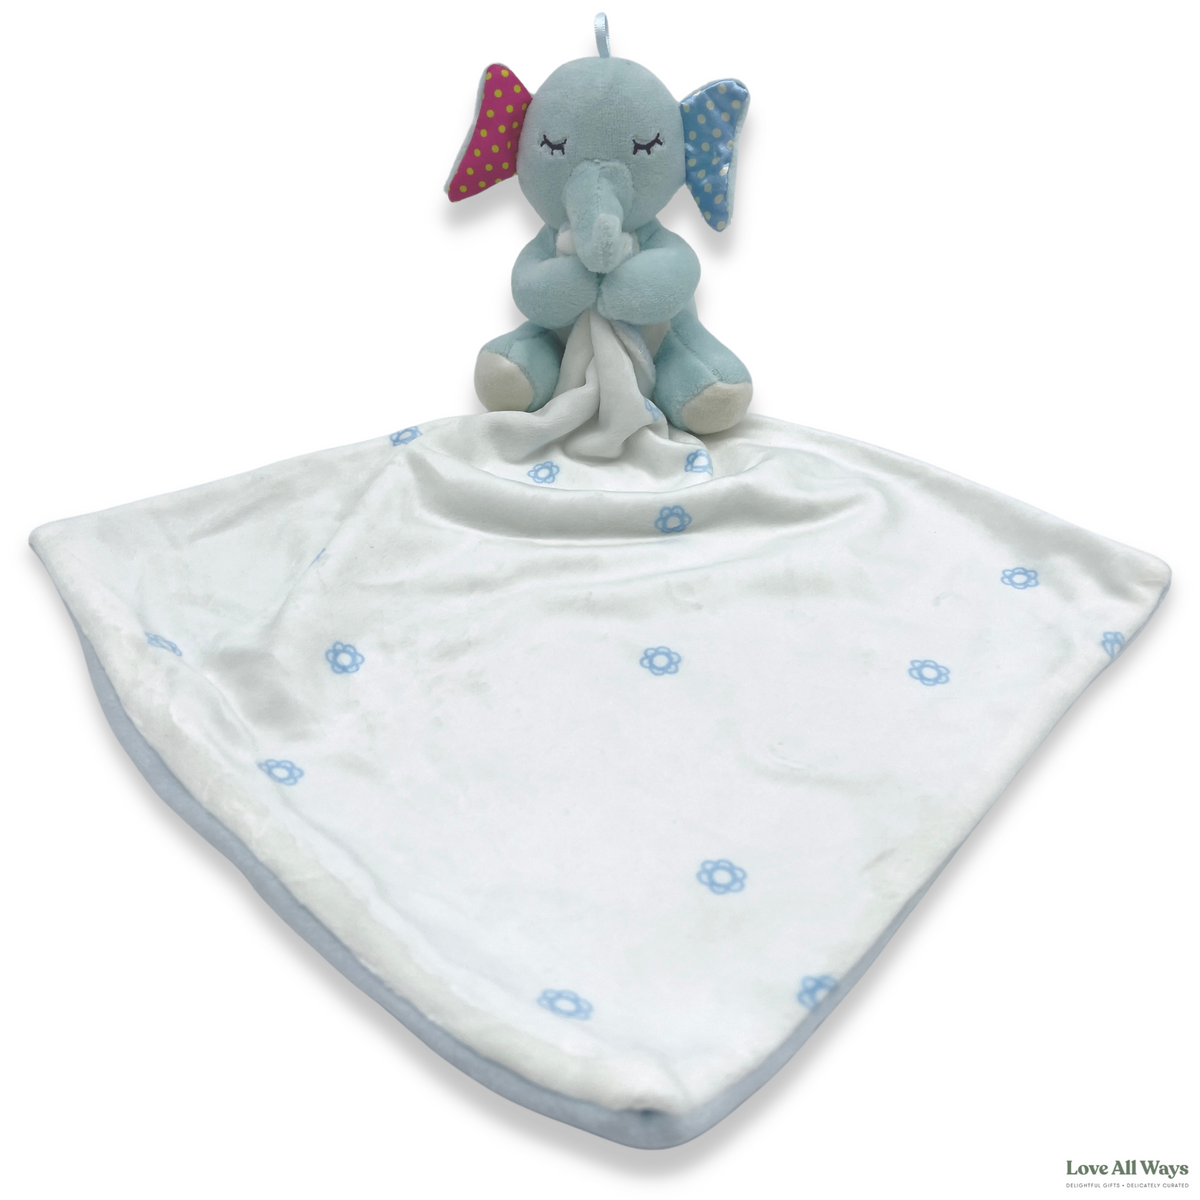 Love All Ways Soft Plush Security Blanket - Blue Elephant